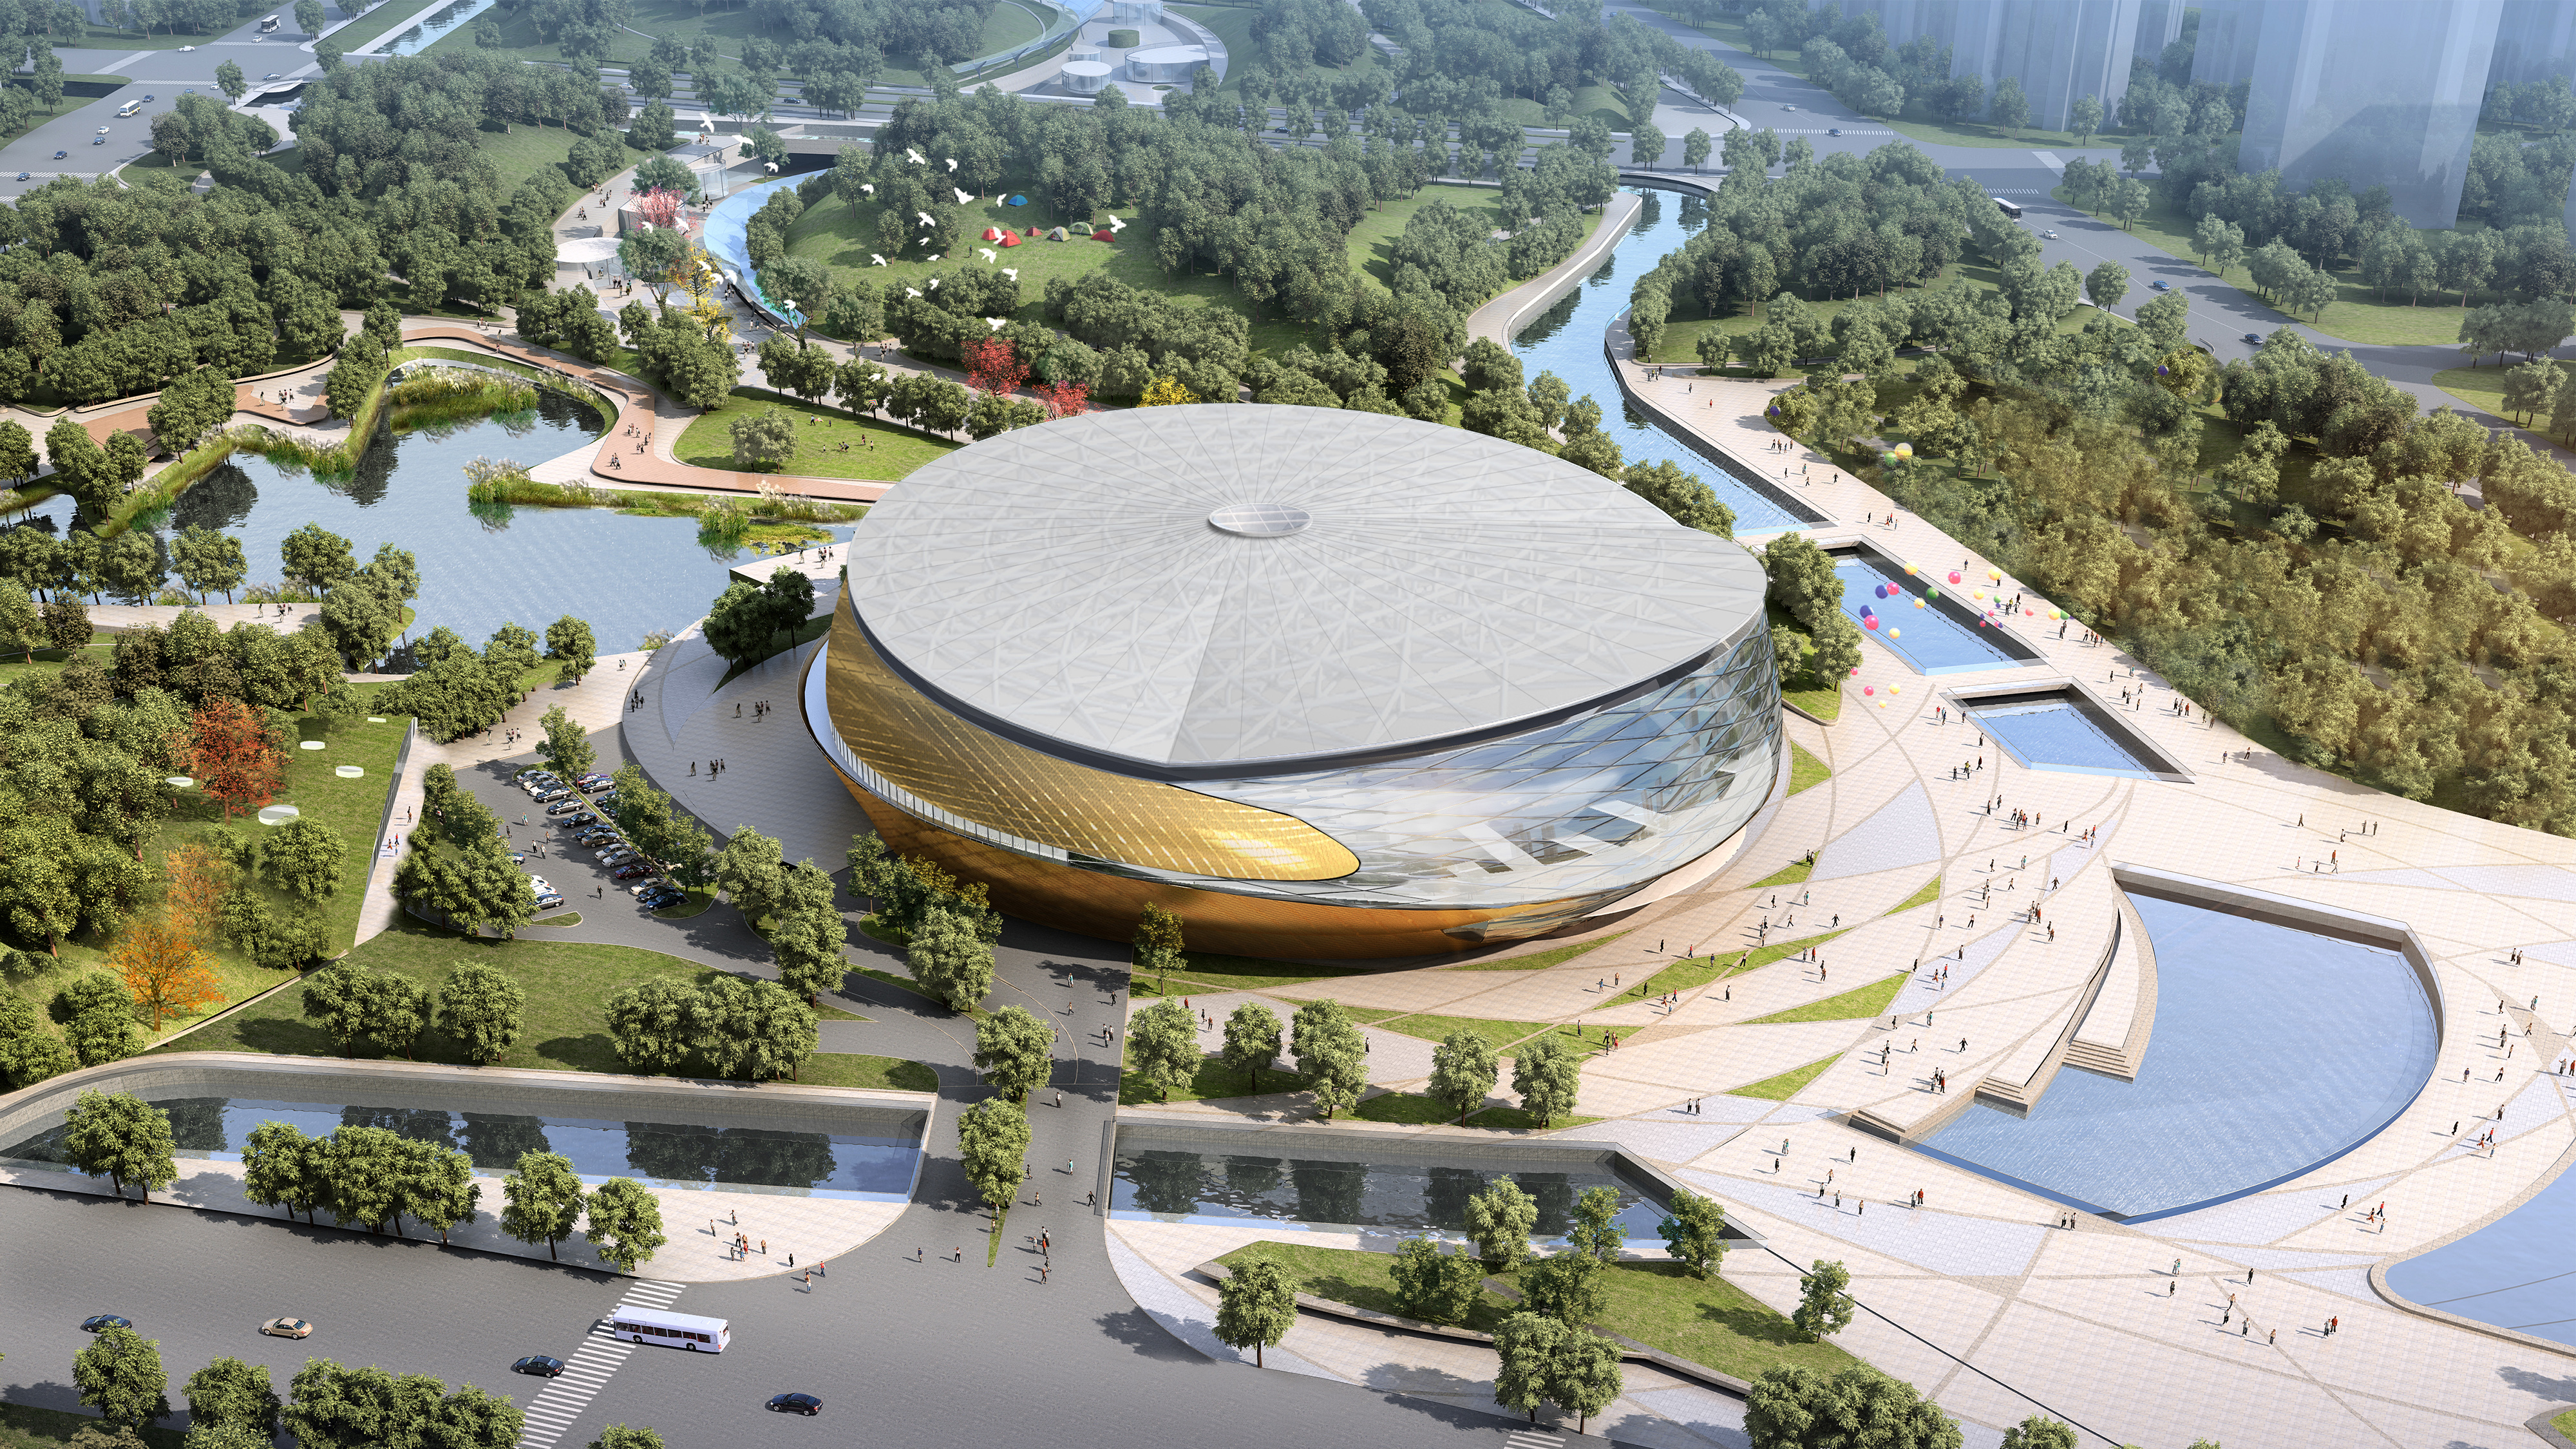 2022 Asian games sports park (winning proposal)